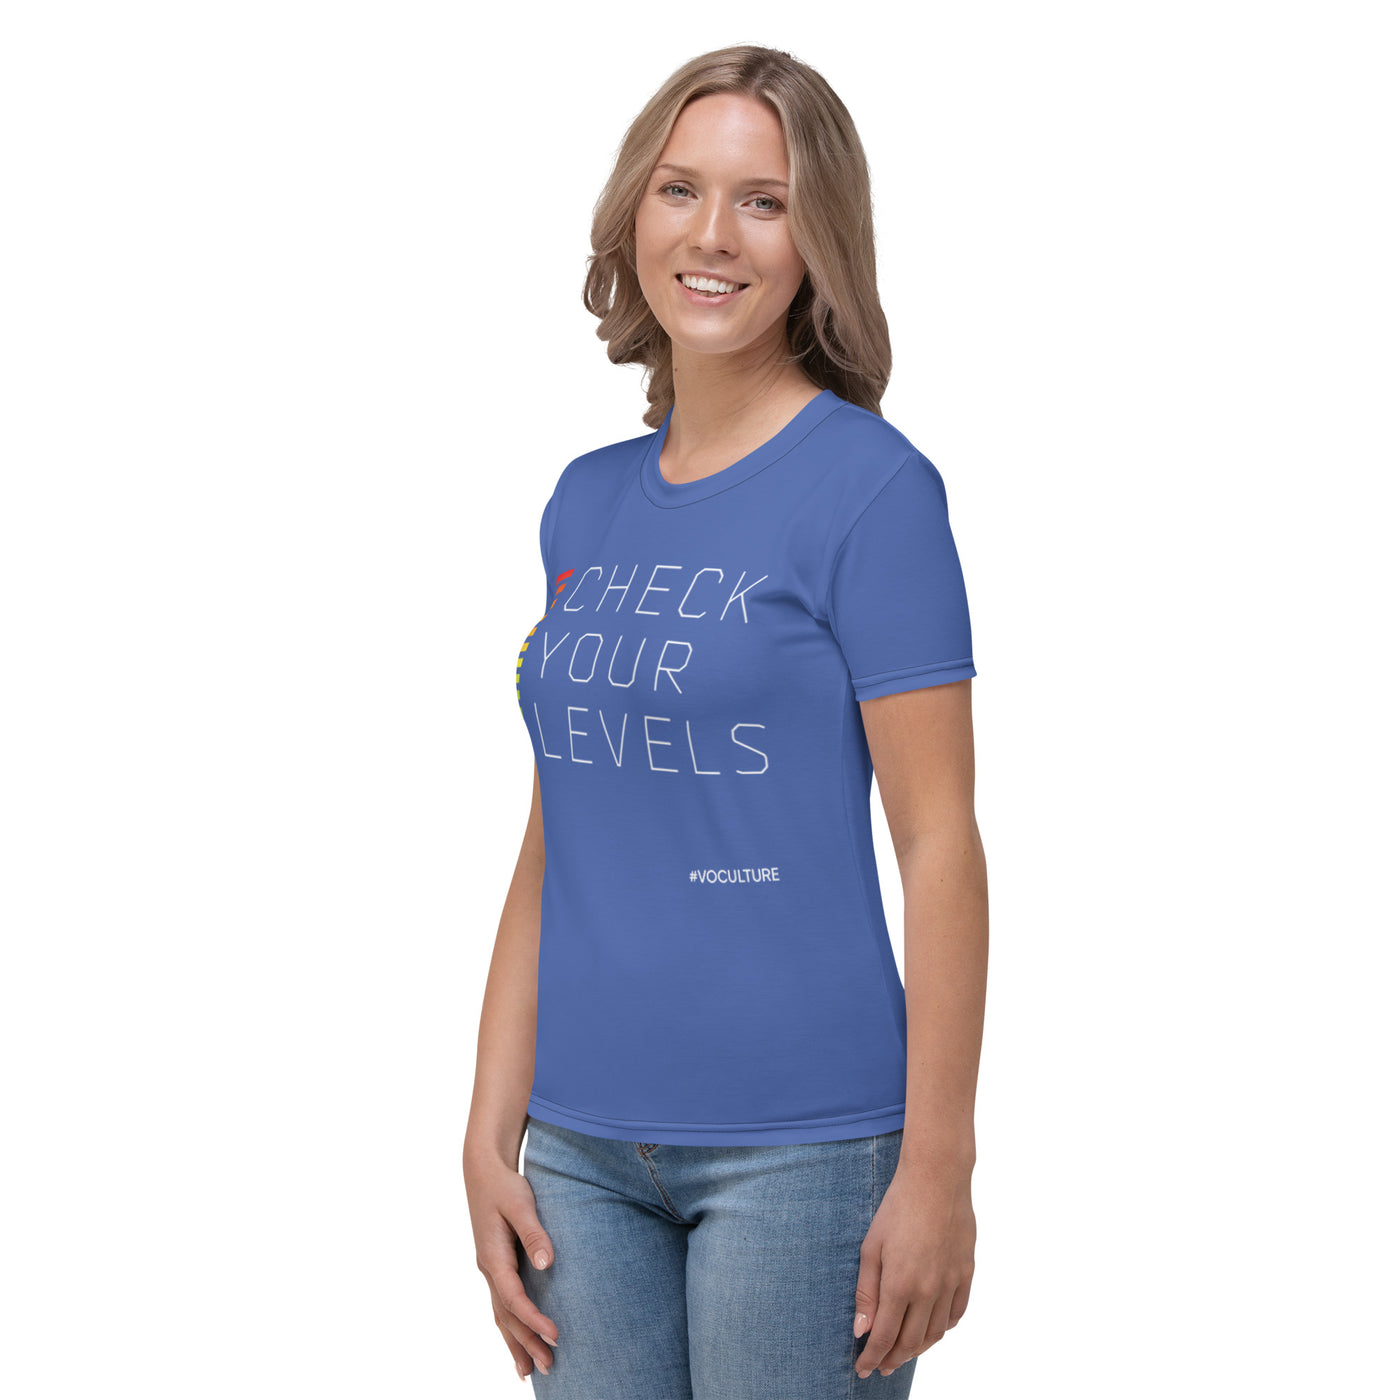 CHECK YOUR LEVELS Women's T-shirt blue